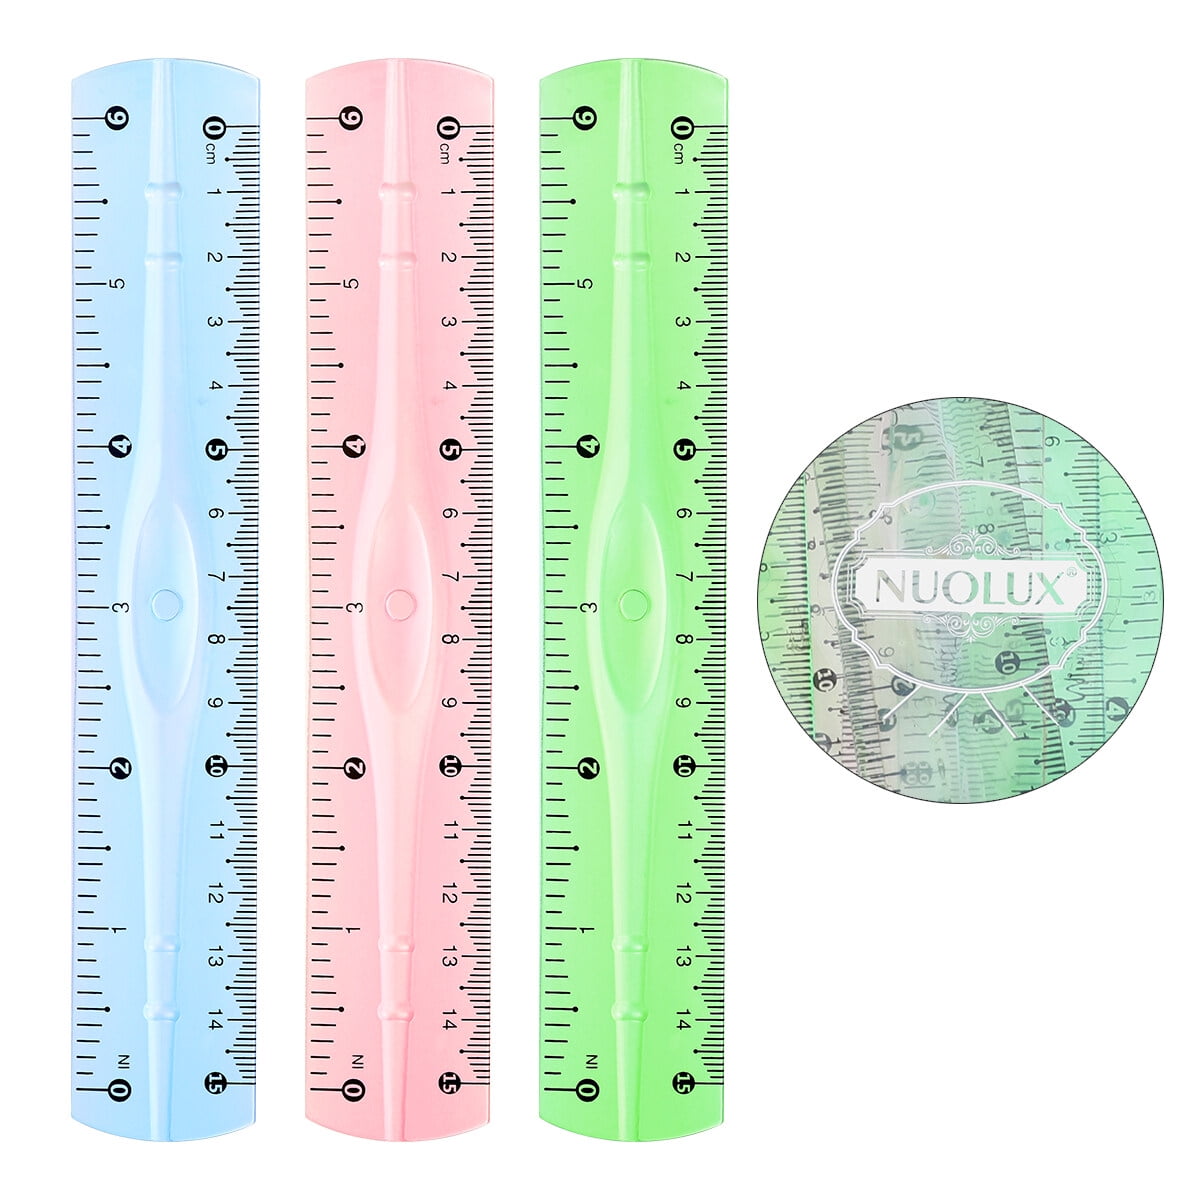 Plastic Rulers Mathematics School Homework Stock Photo 262755866